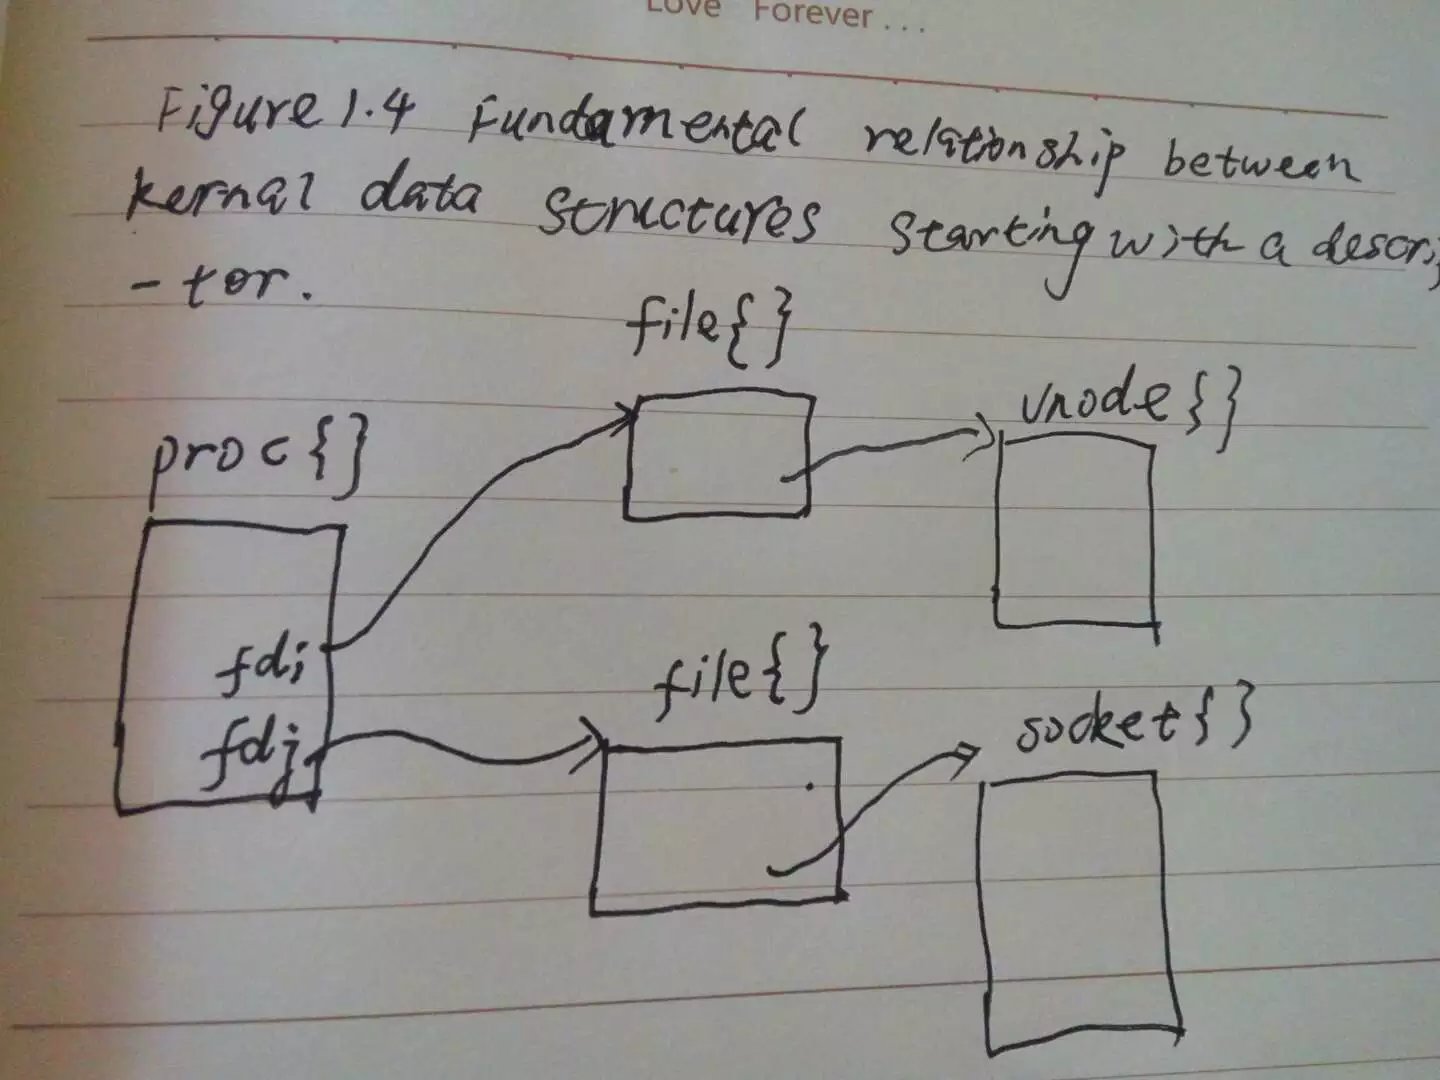 Fundamental relationship between kernel data structures starting with a descriptor